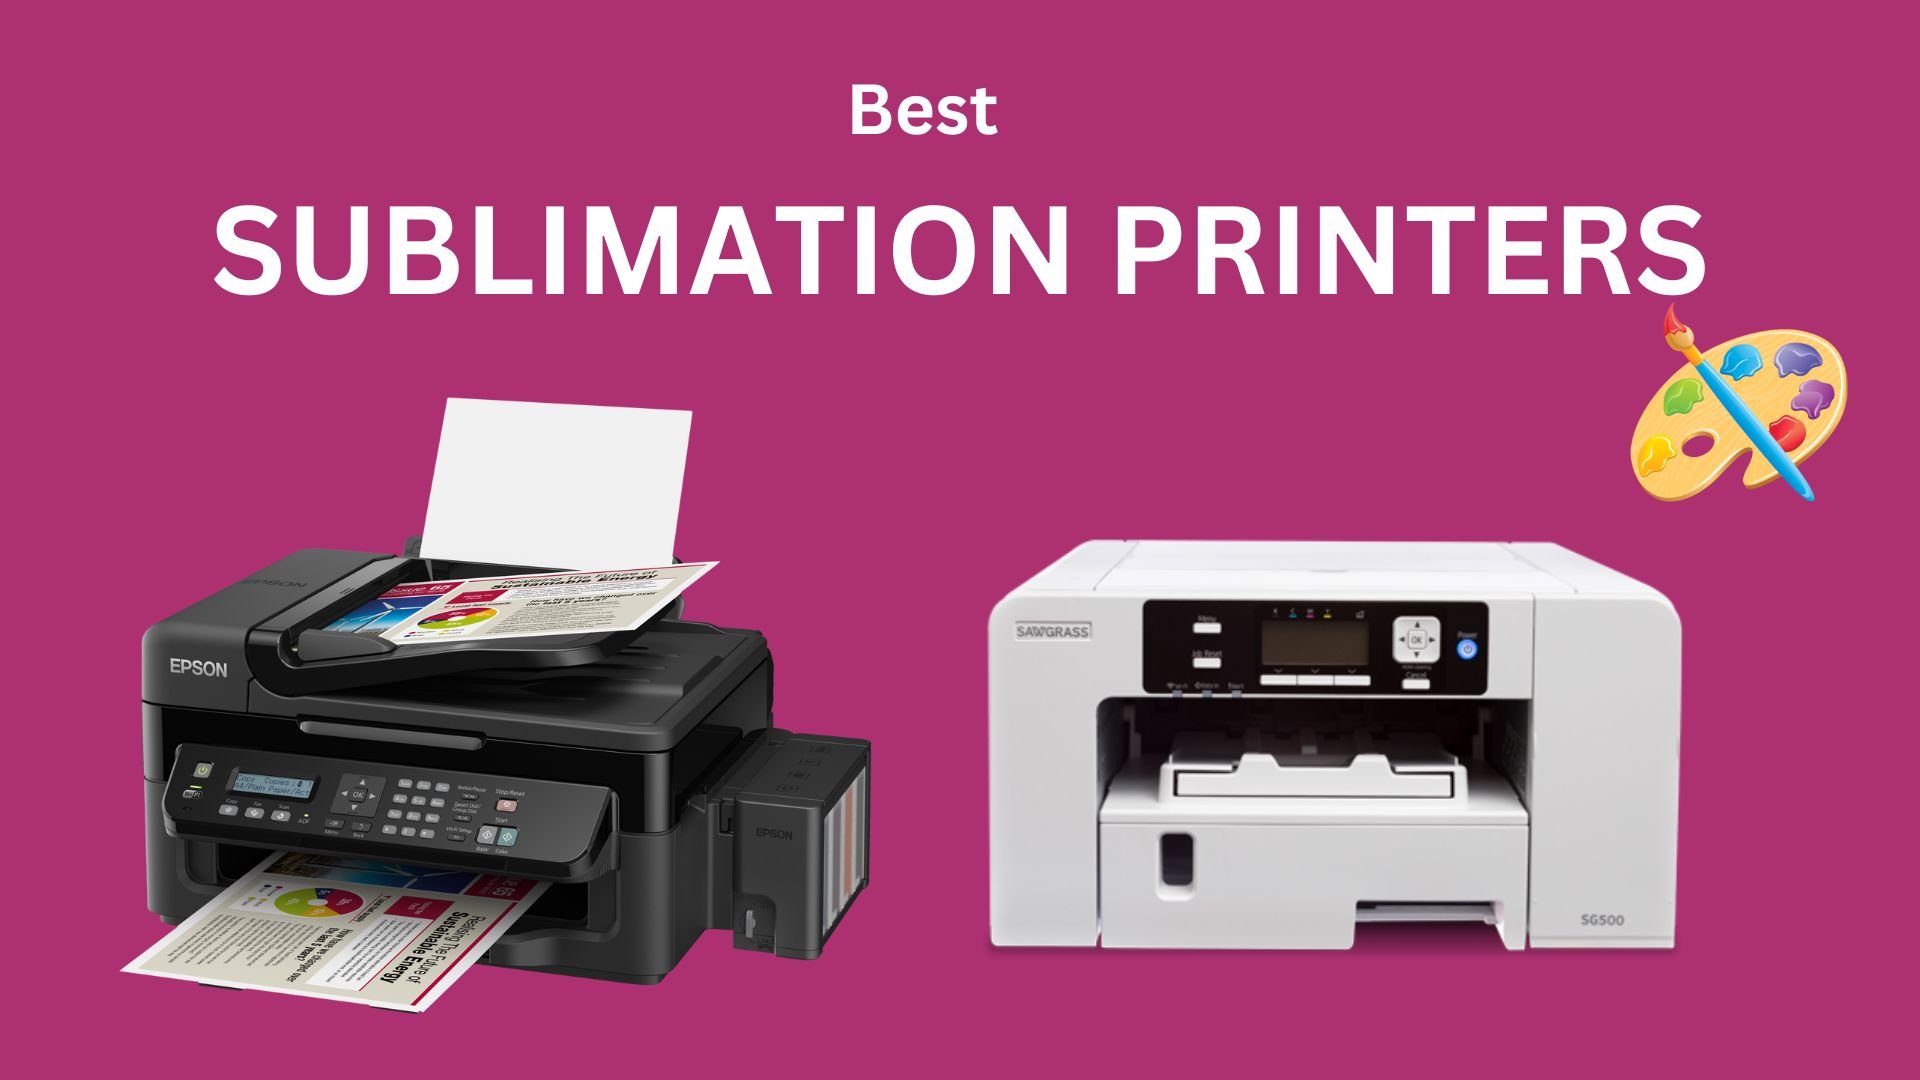 best sublimation printer